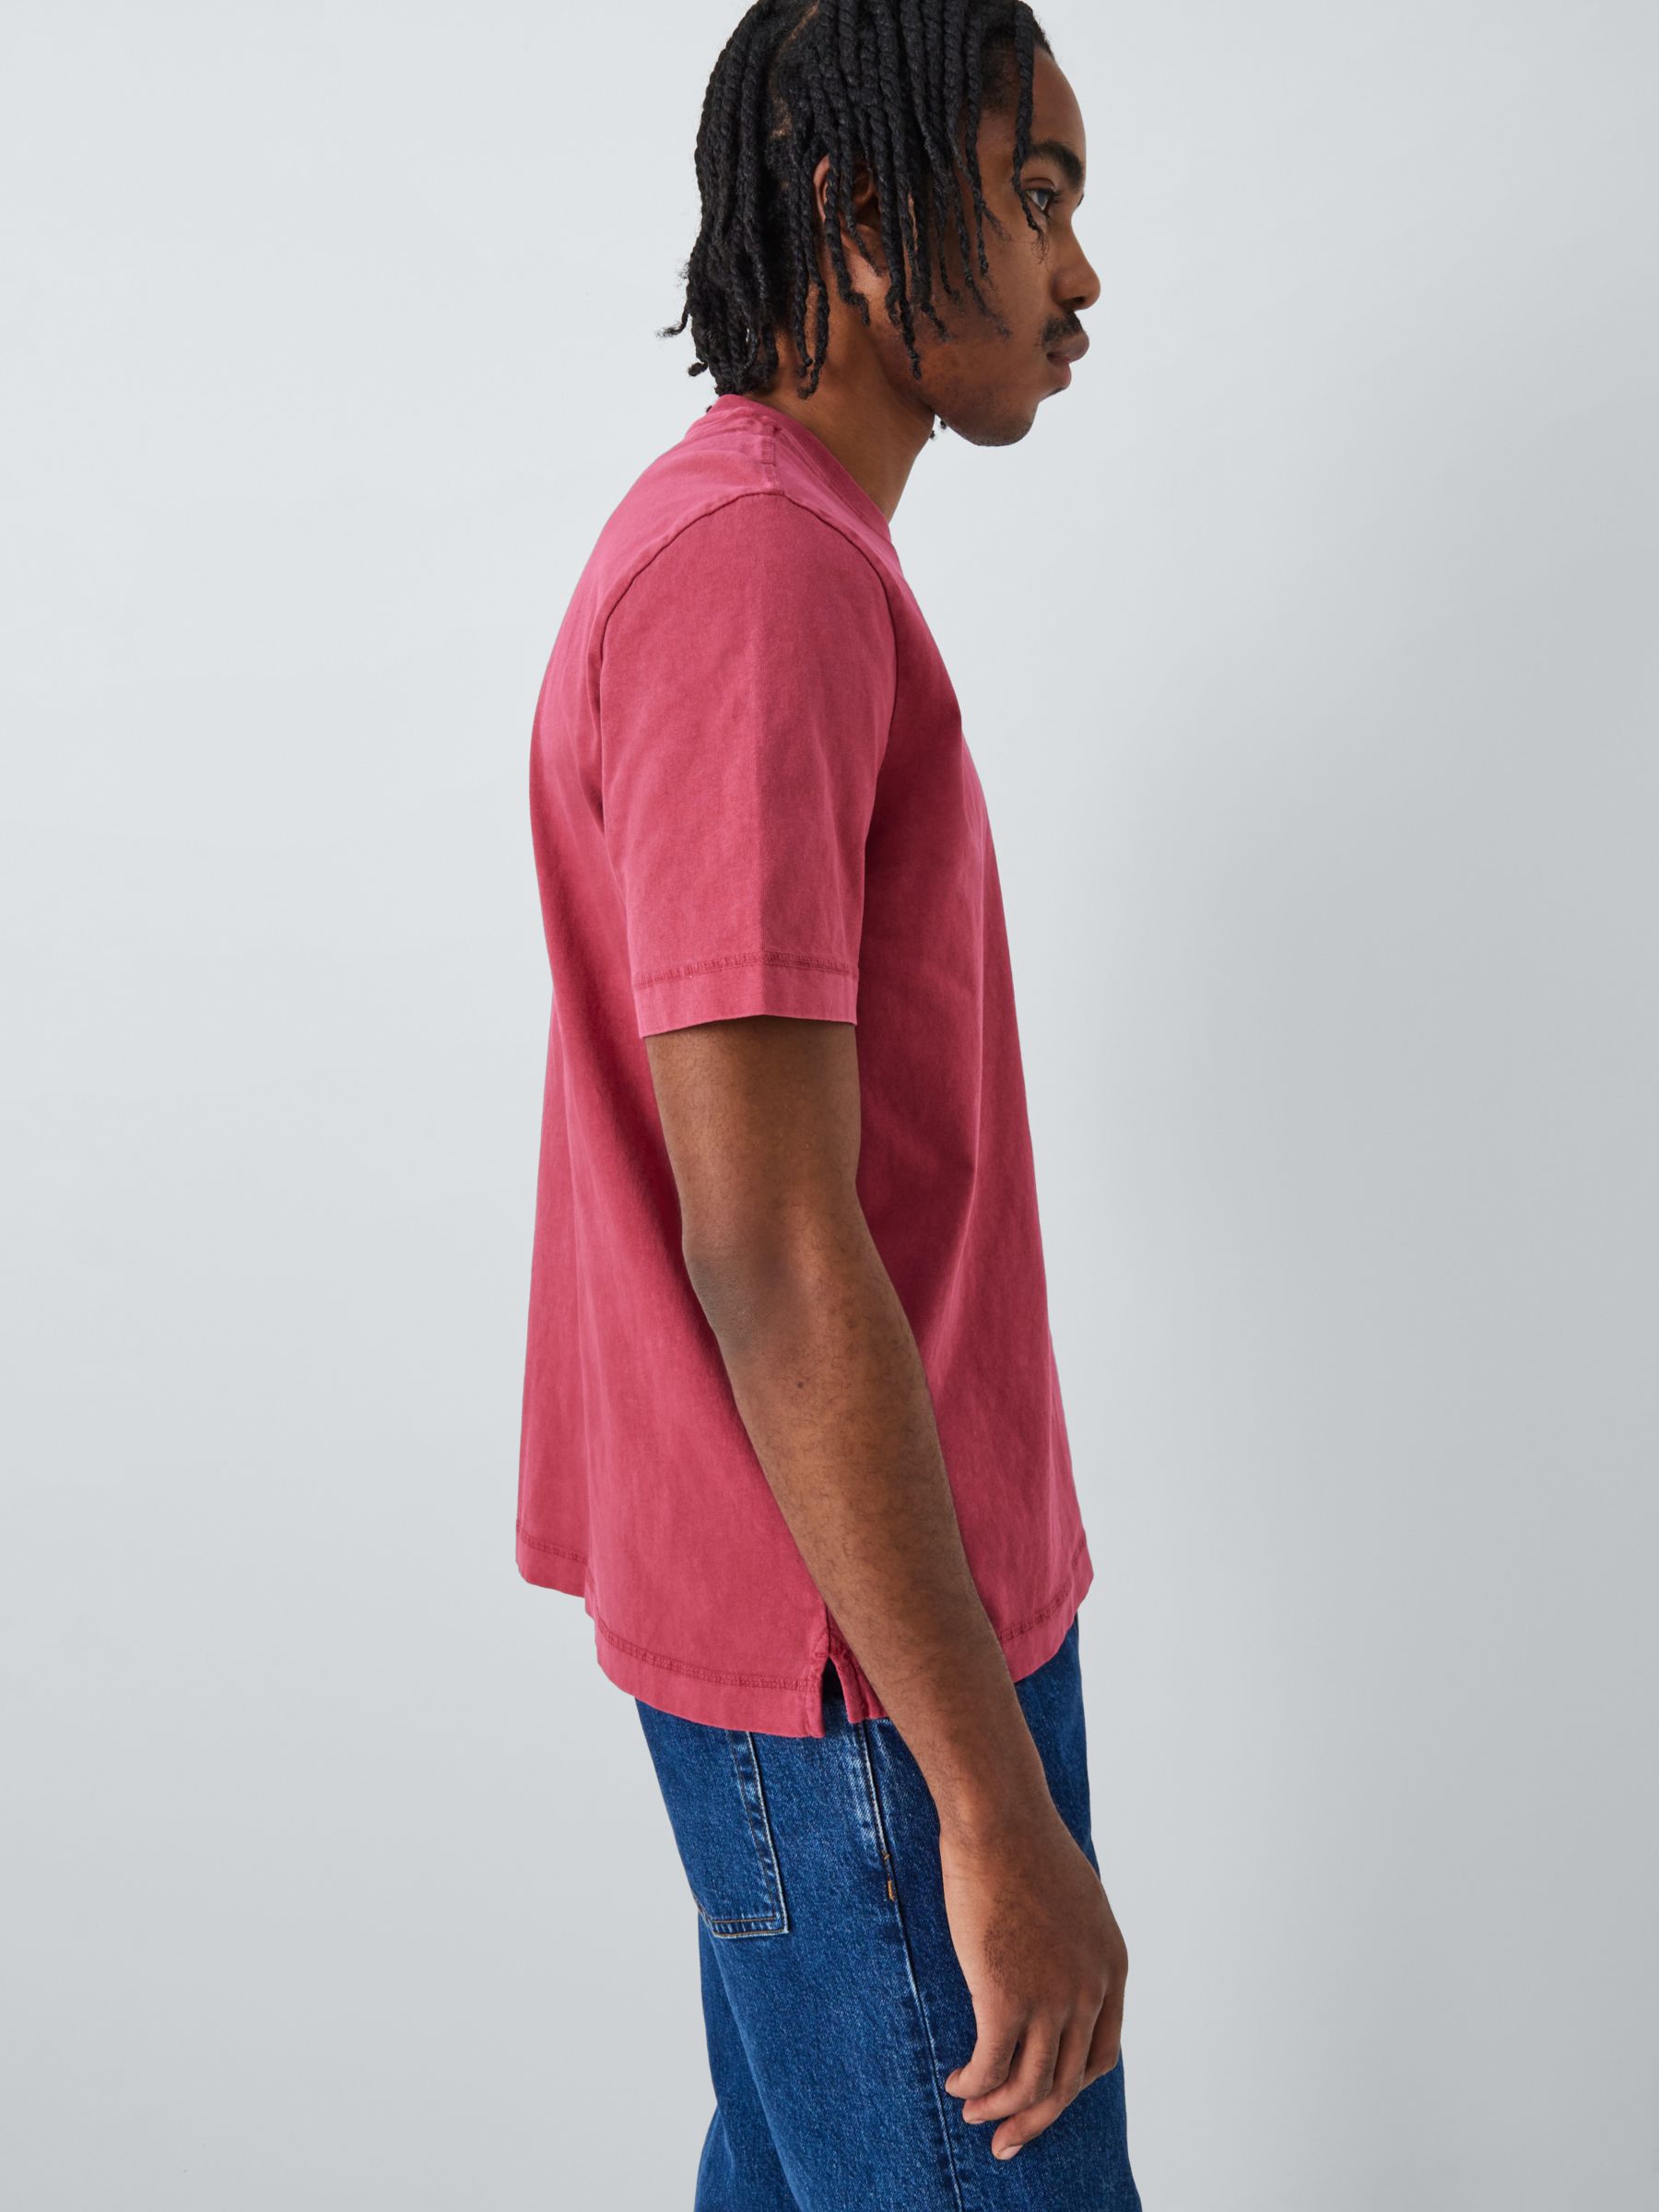 Paul Smith Short Sleeve Regular Fit T-Shirt, Pink, S